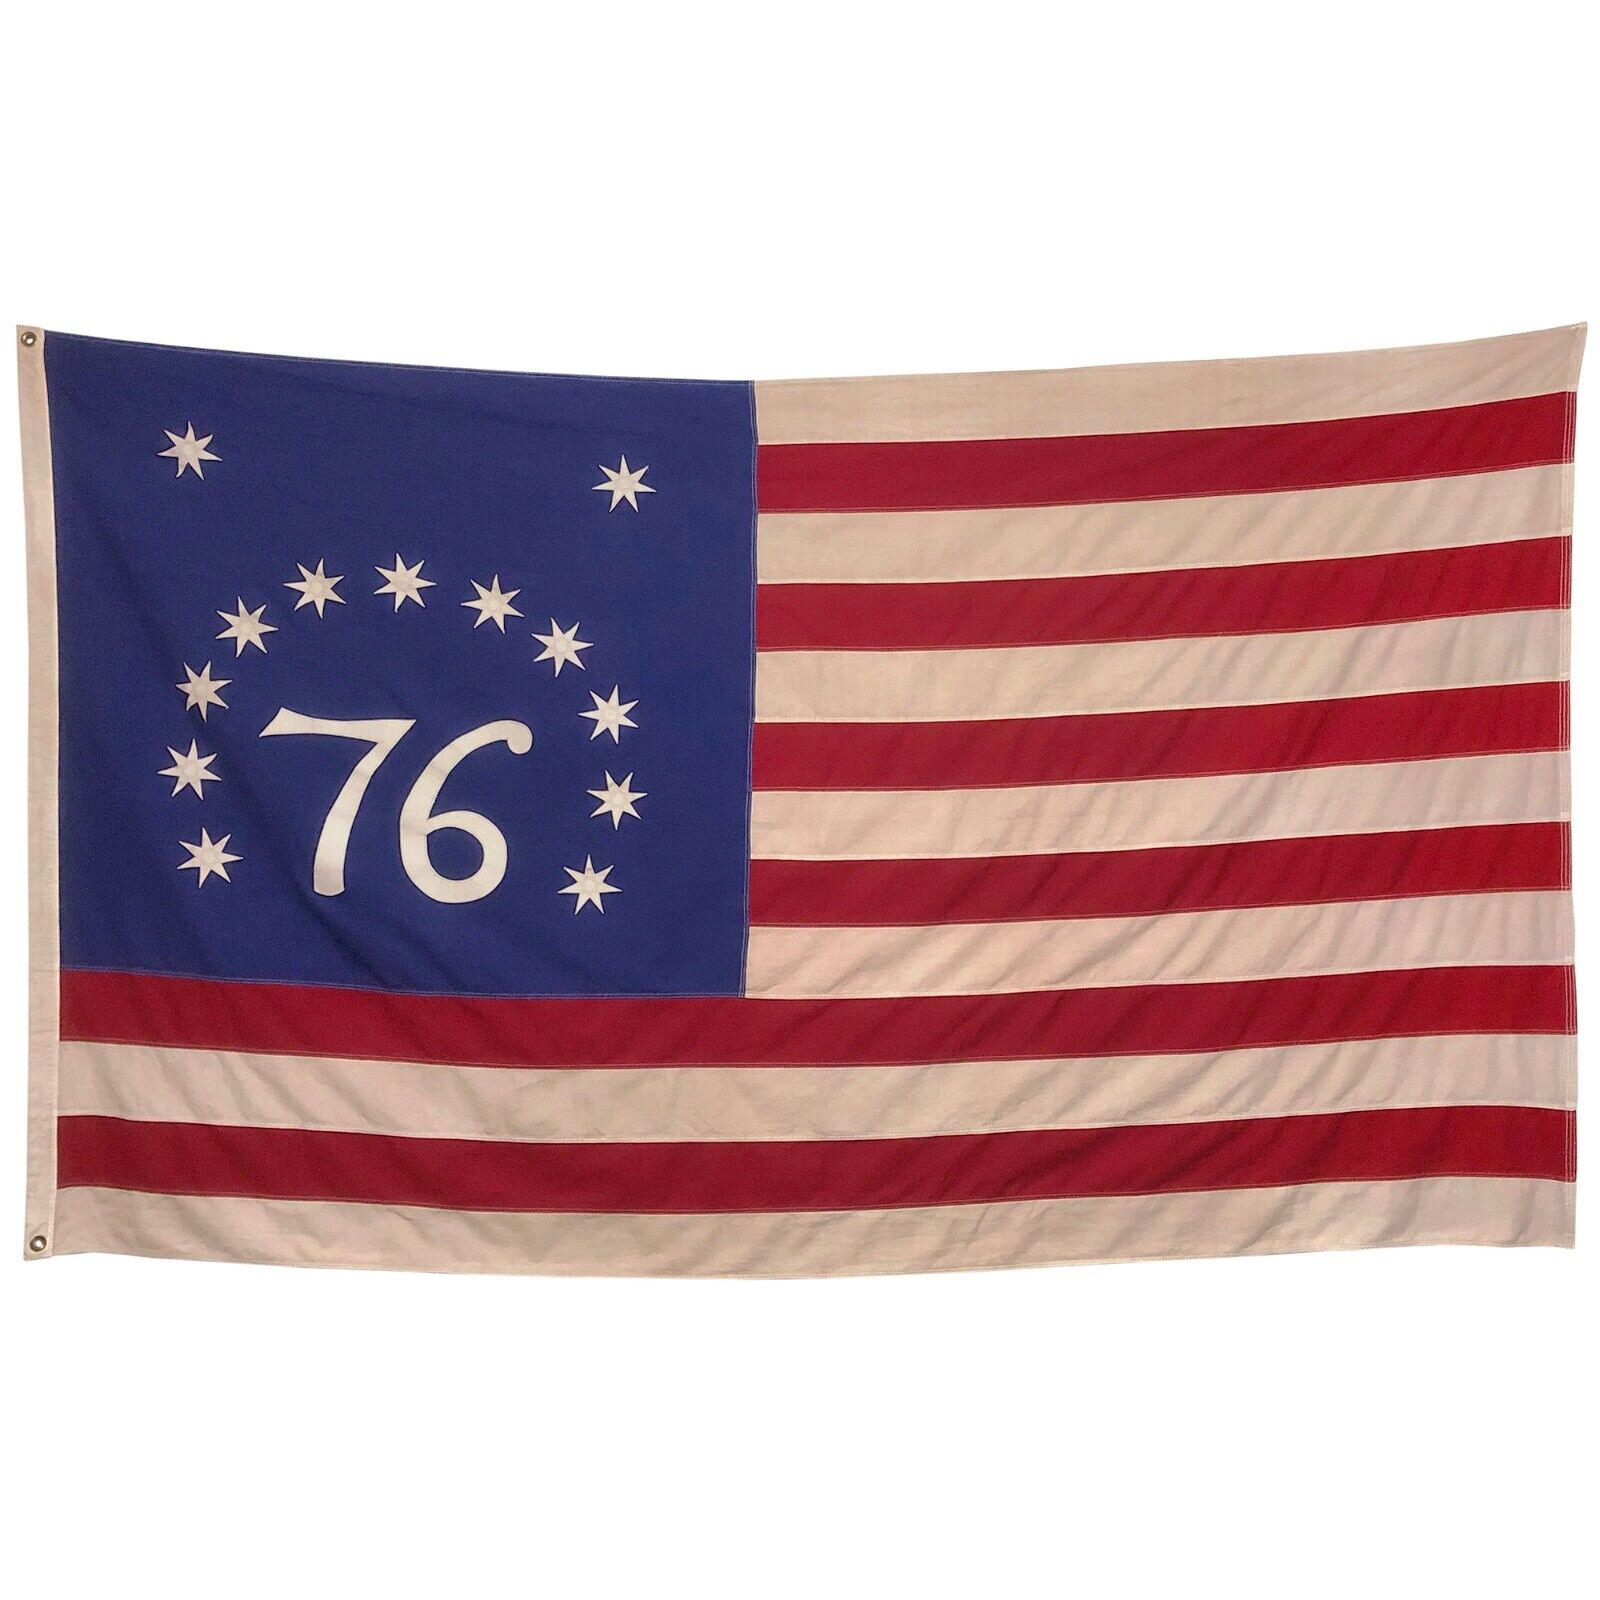 XL Vintage Sewn Cotton Bennington 76 Flag Old Sewn Cloth American USA Historic